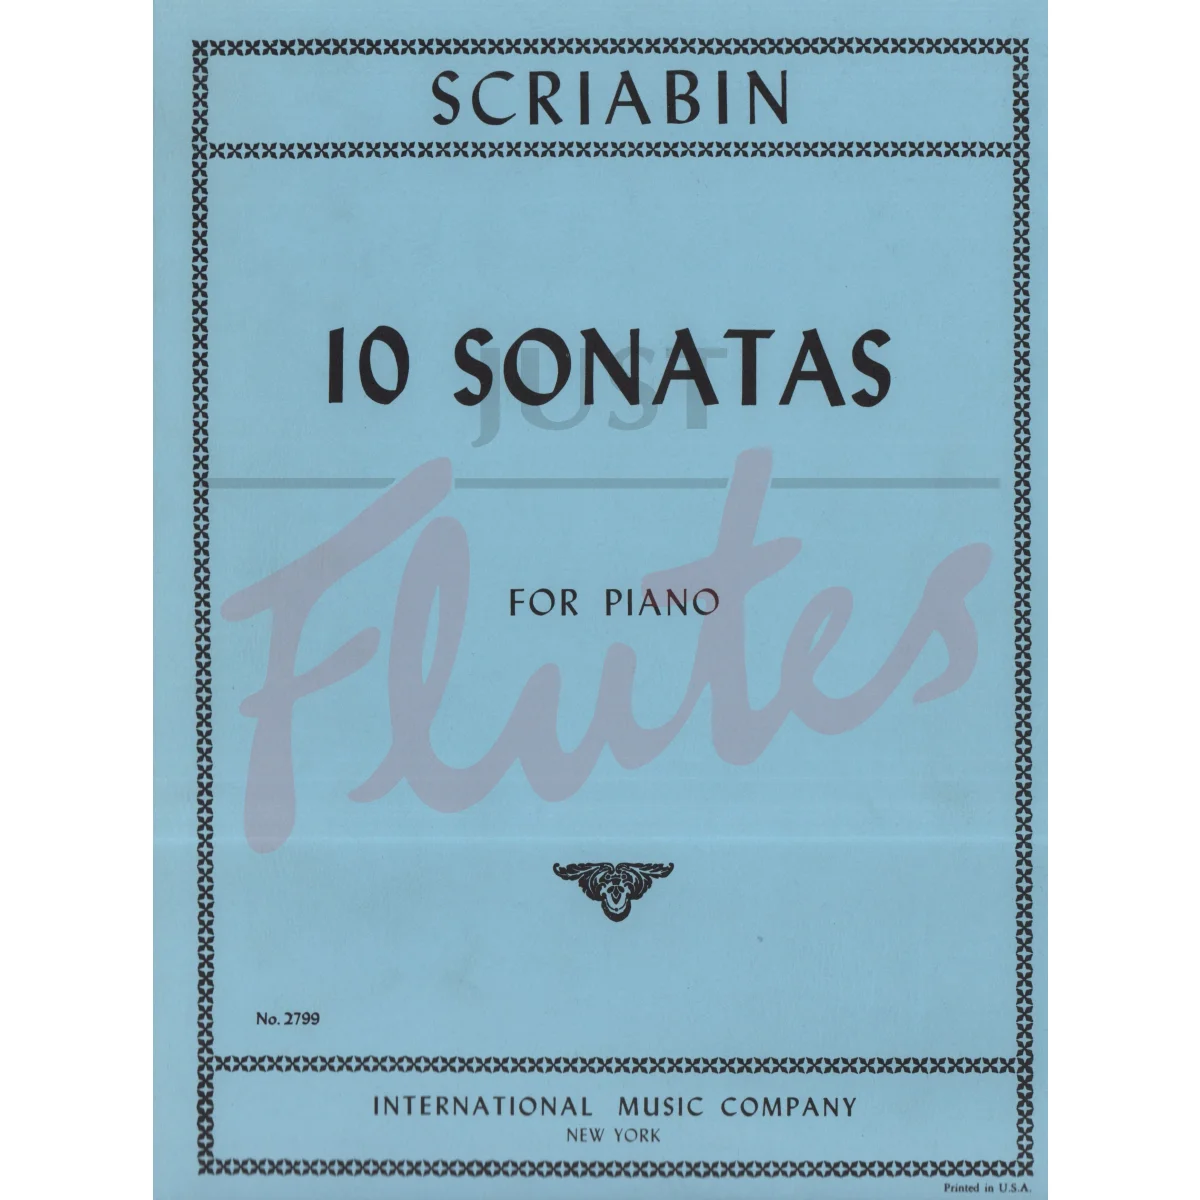 10 Sonatas for Piano